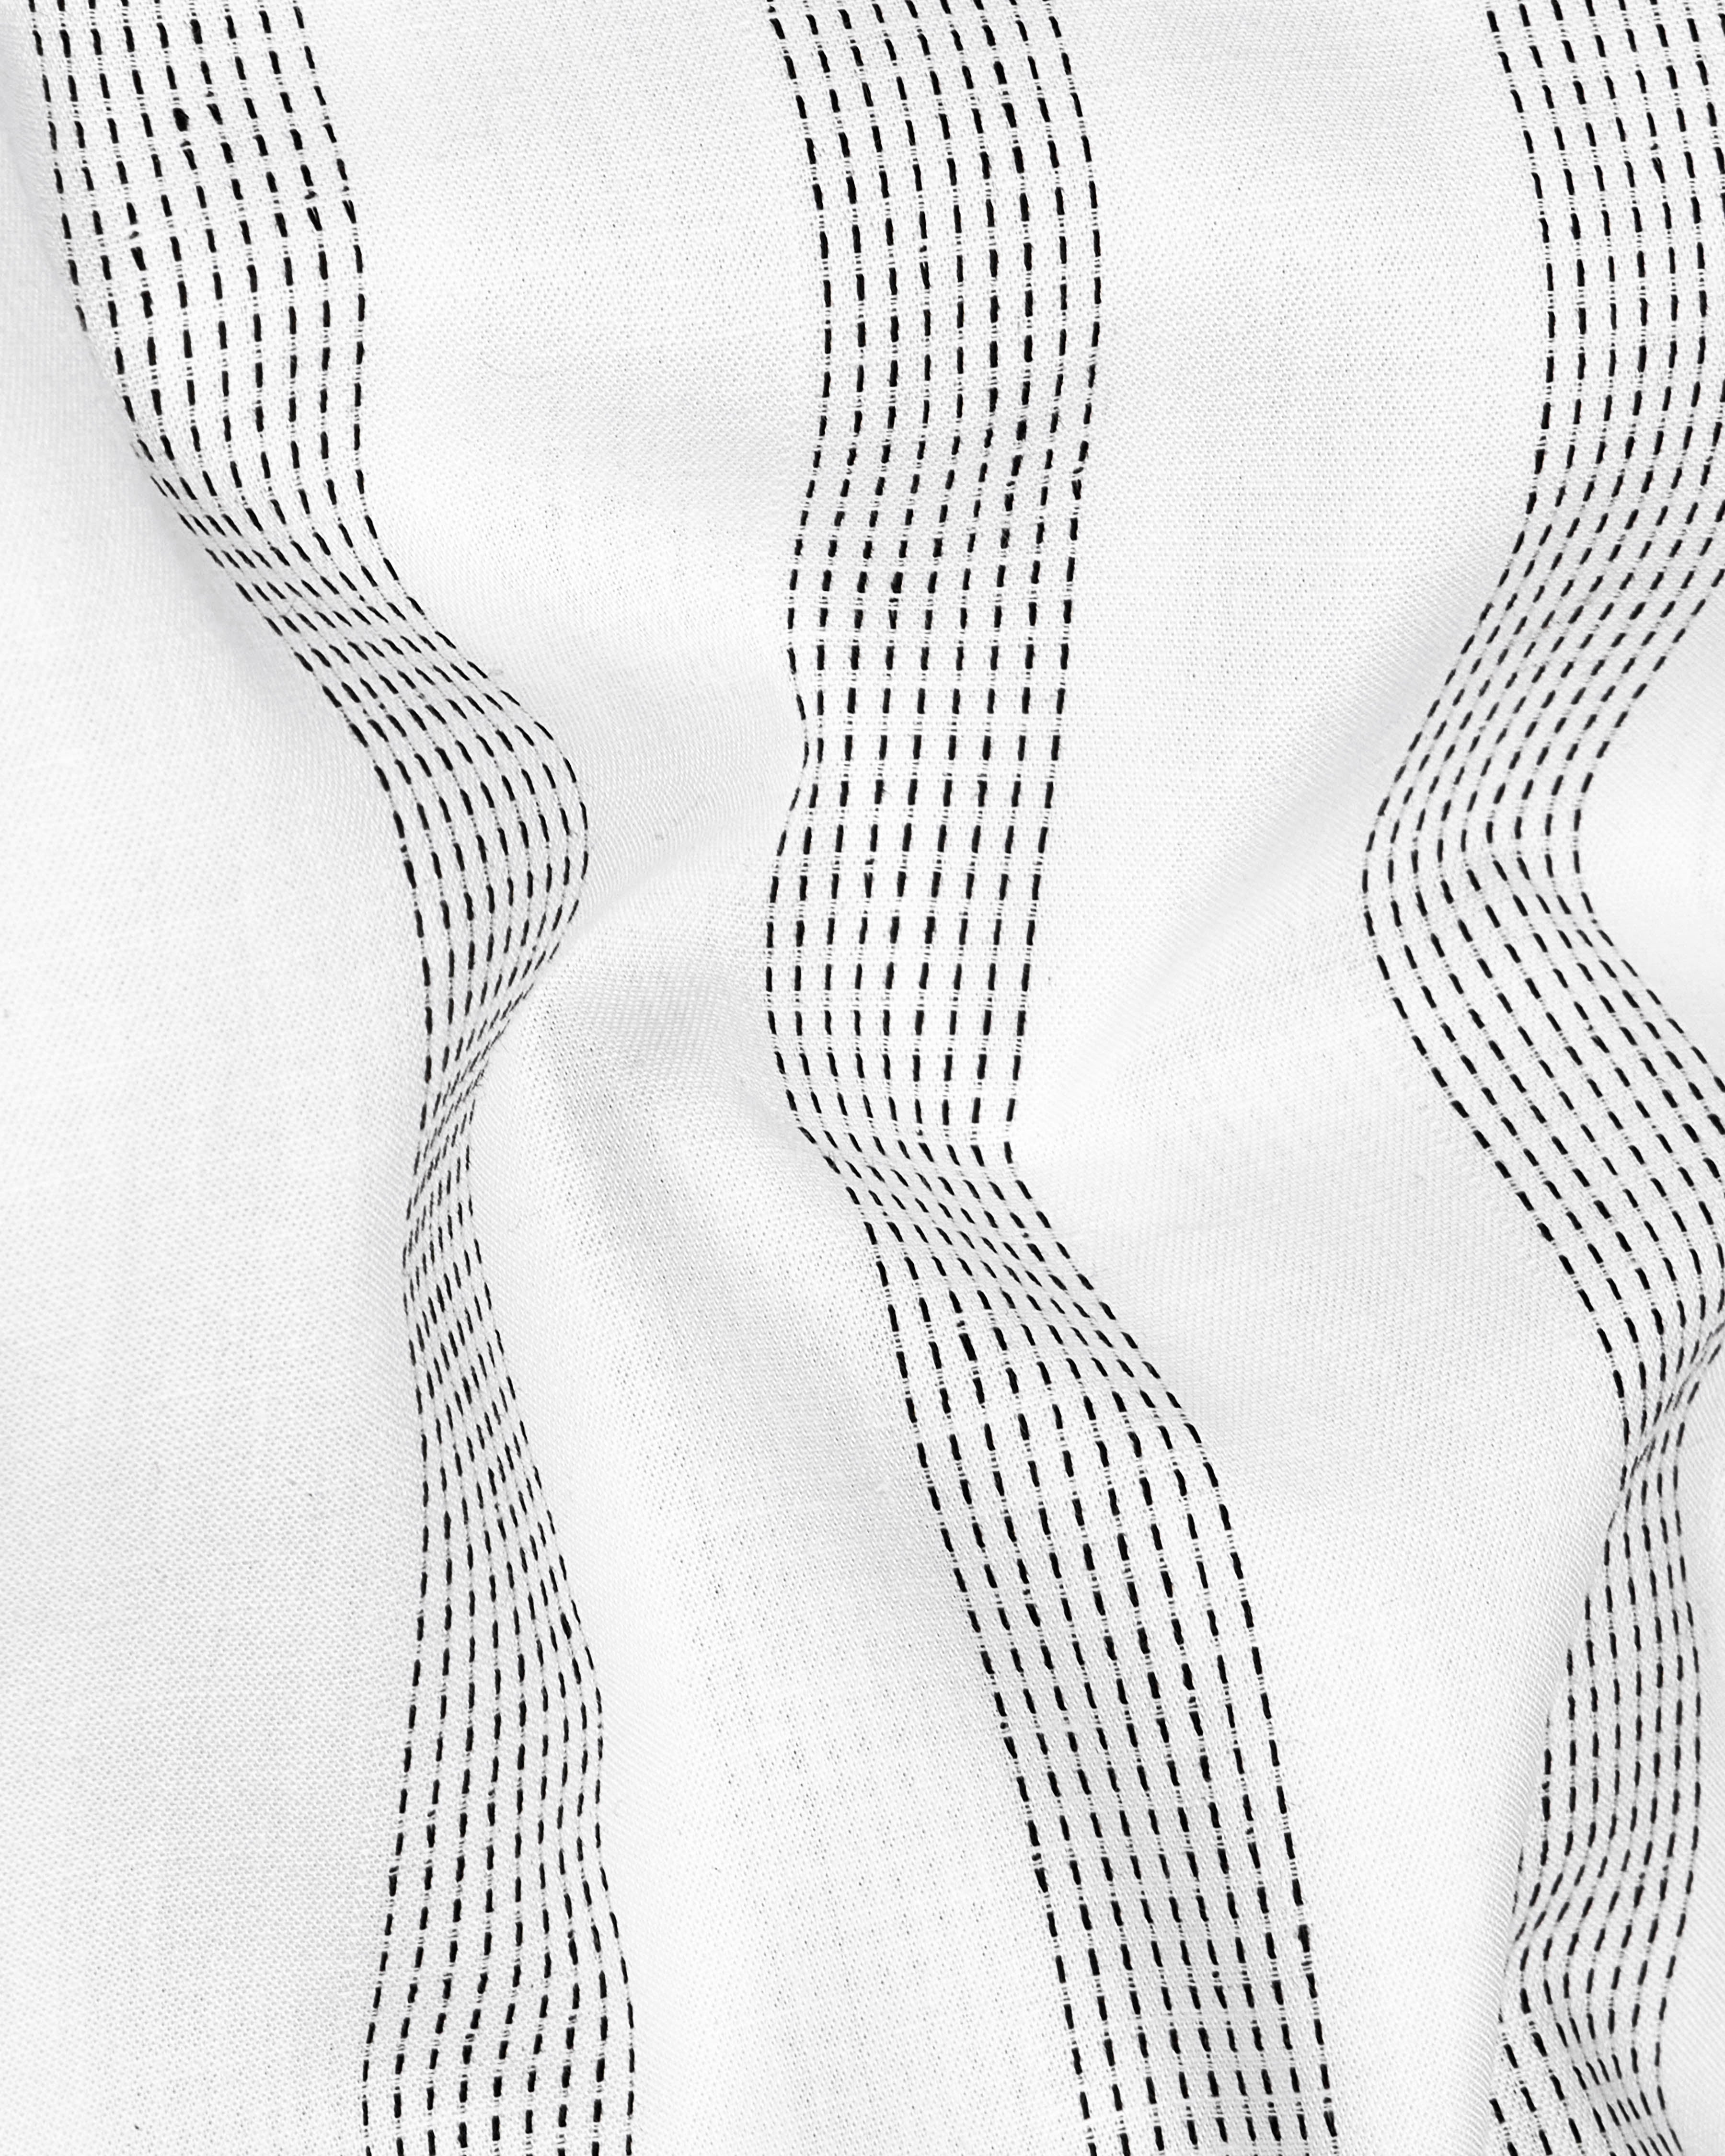 Bright White with Black Striped Dobby Textured Premium Giza Cotton Kurta Shirt 9293-KS-38,9293-KS-H-38,9293-KS-39,9293-KS-H-39,9293-KS-40,9293-KS-H-40,9293-KS-42,9293-KS-H-42,9293-KS-44,9293-KS-H-44,9293-KS-46,9293-KS-H-46,9293-KS-48,9293-KS-H-48,9293-KS-50,9293-KS-H-50,9293-KS-52,9293-KS-H-52